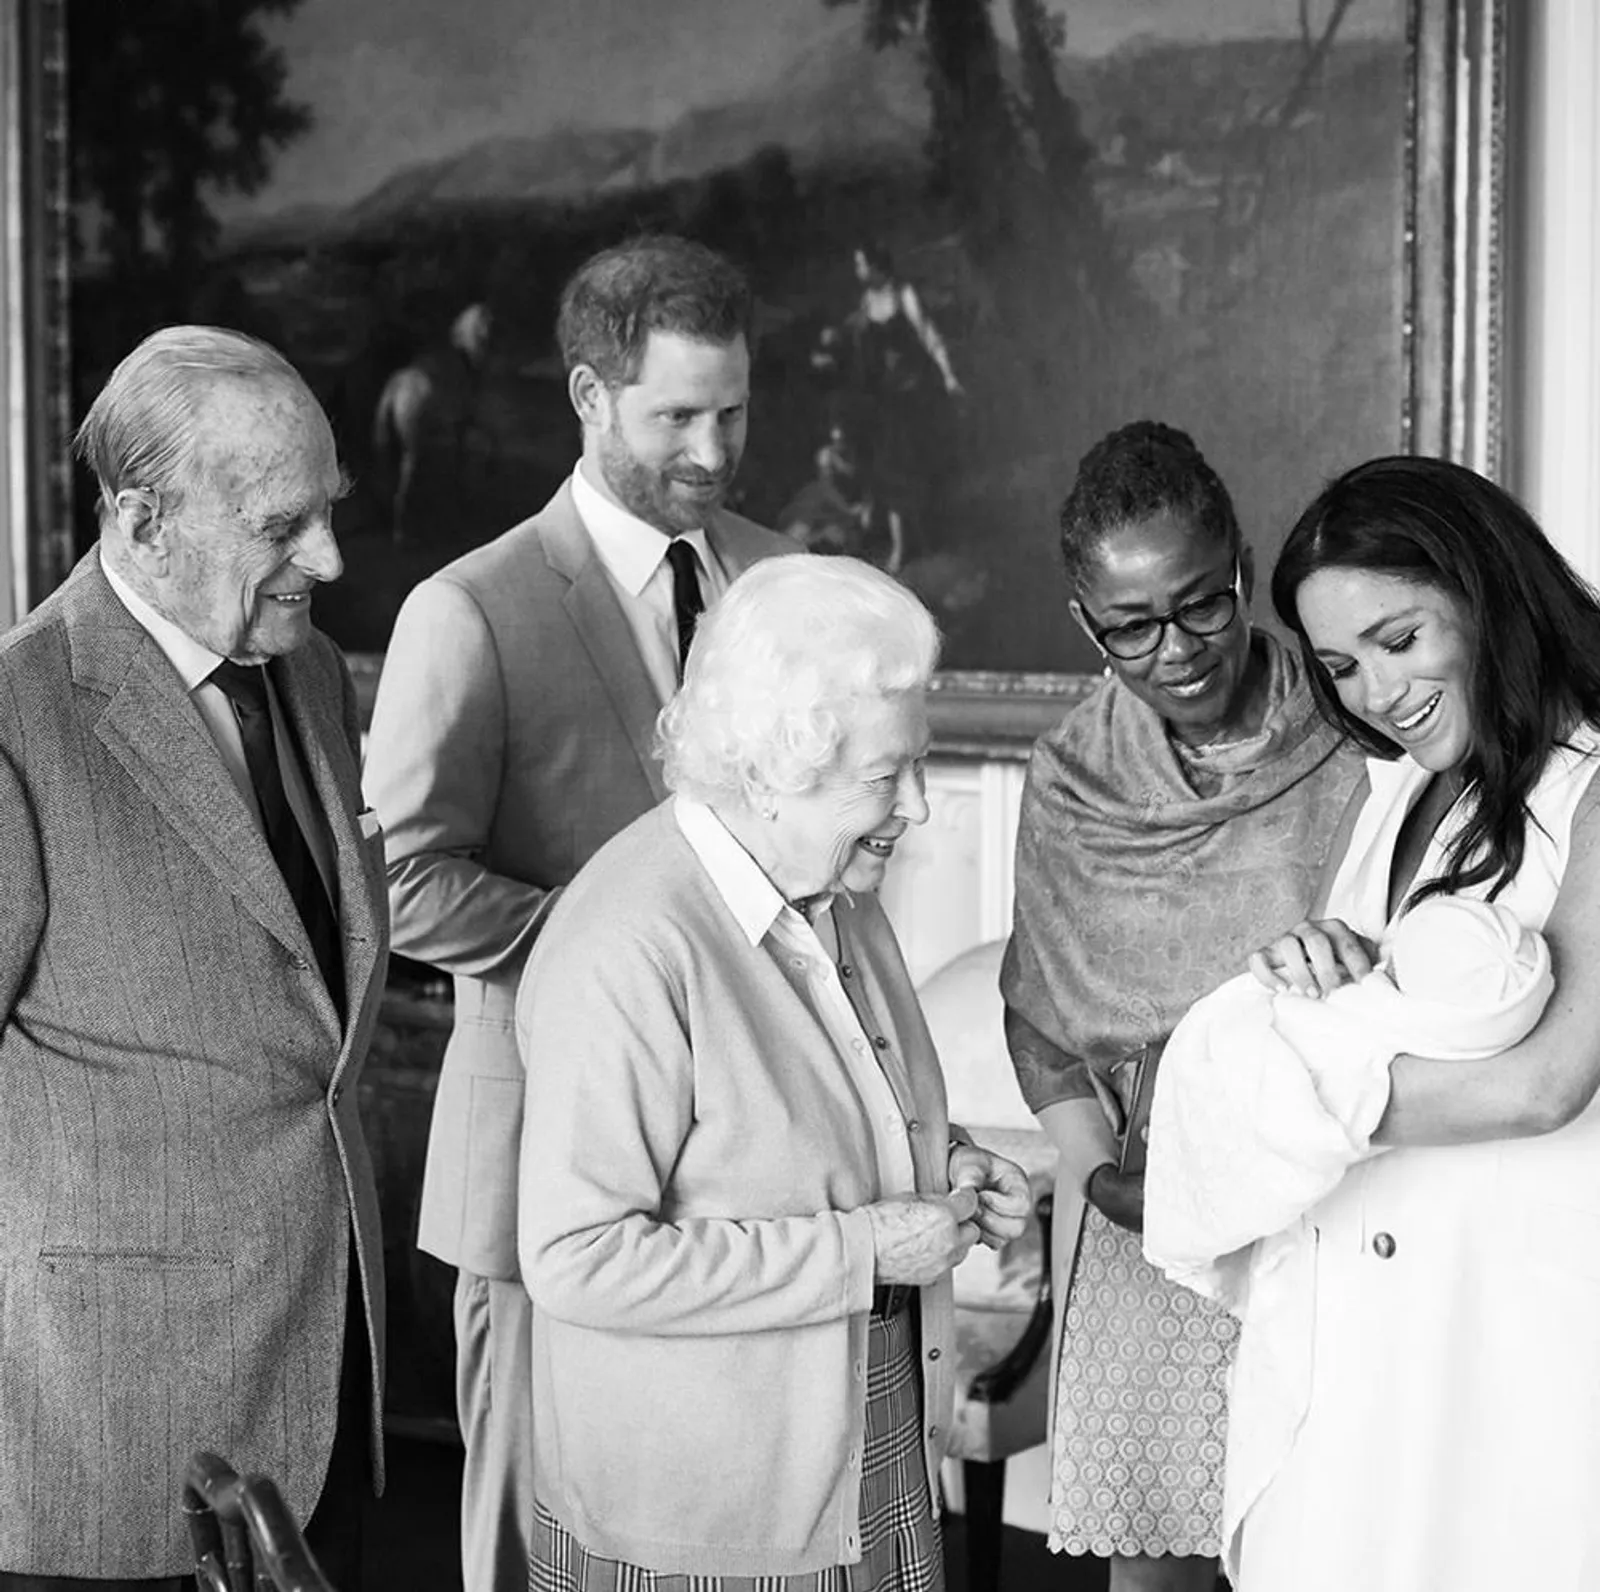 Arti Nama dan 4 Fakta Kelahiran Putra Meghan Markle & Pangeran Harry